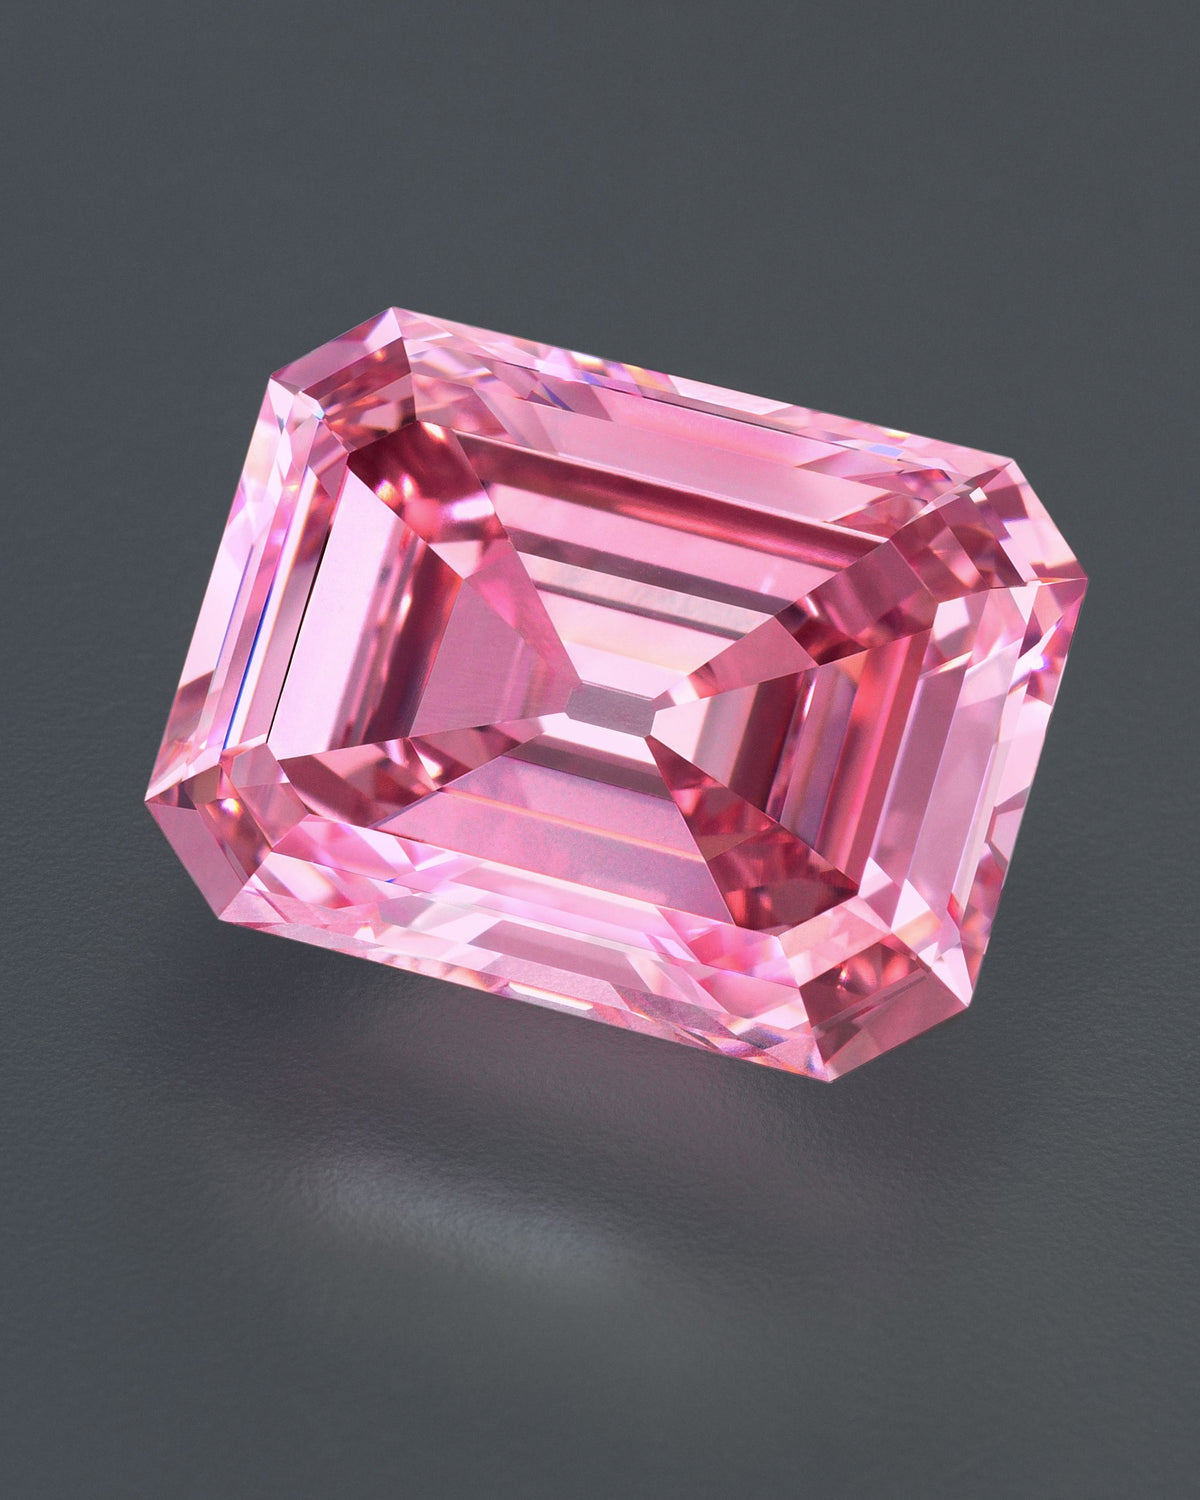 A Class of its Own: the Ronald Abram 7.34 carat Pink Diamond